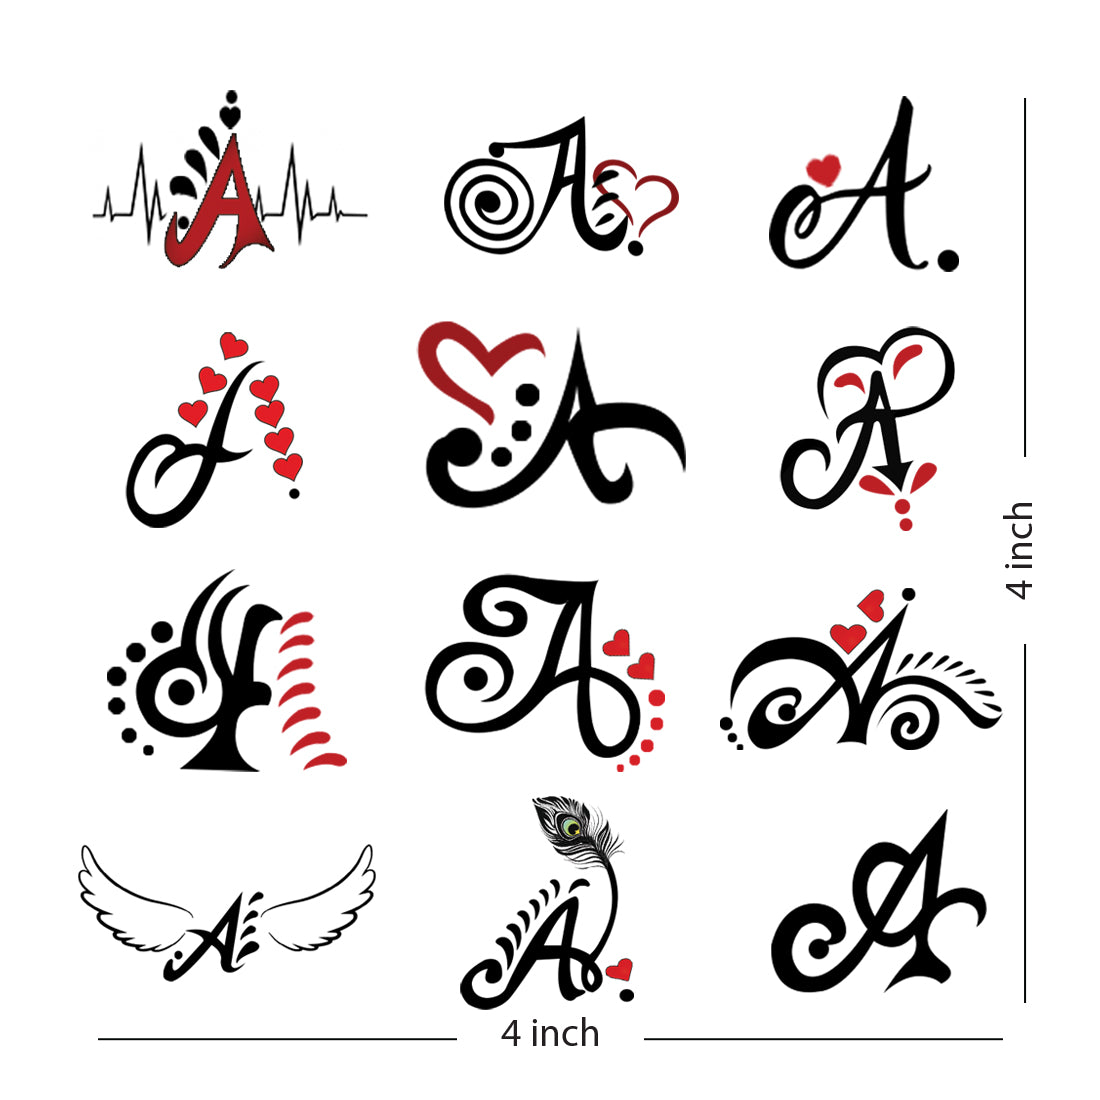 App Insights Tattoo Letter Designs A  Z  Apptopia